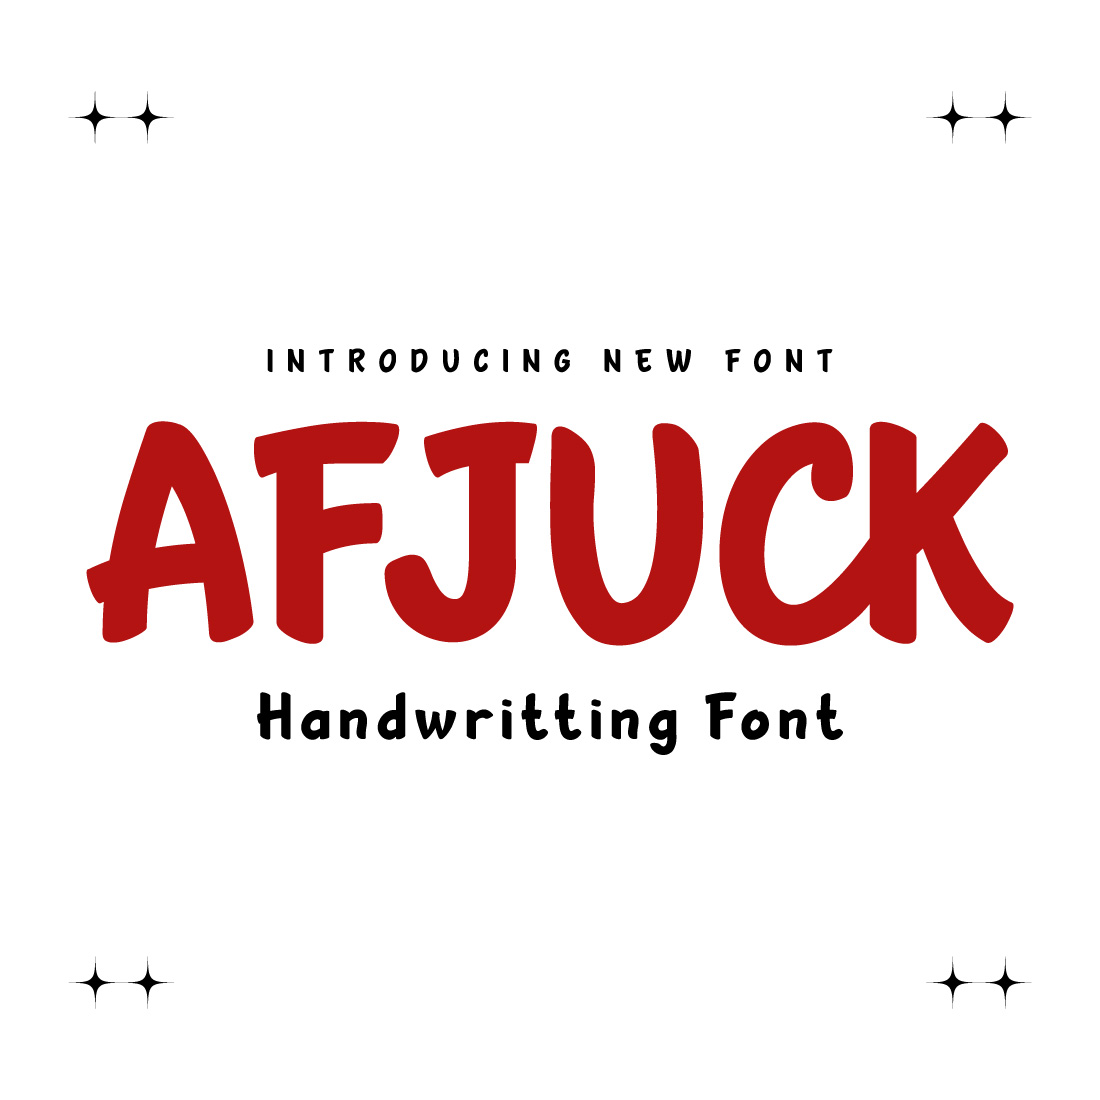 AFJUCK | Handwriting Display cover image.